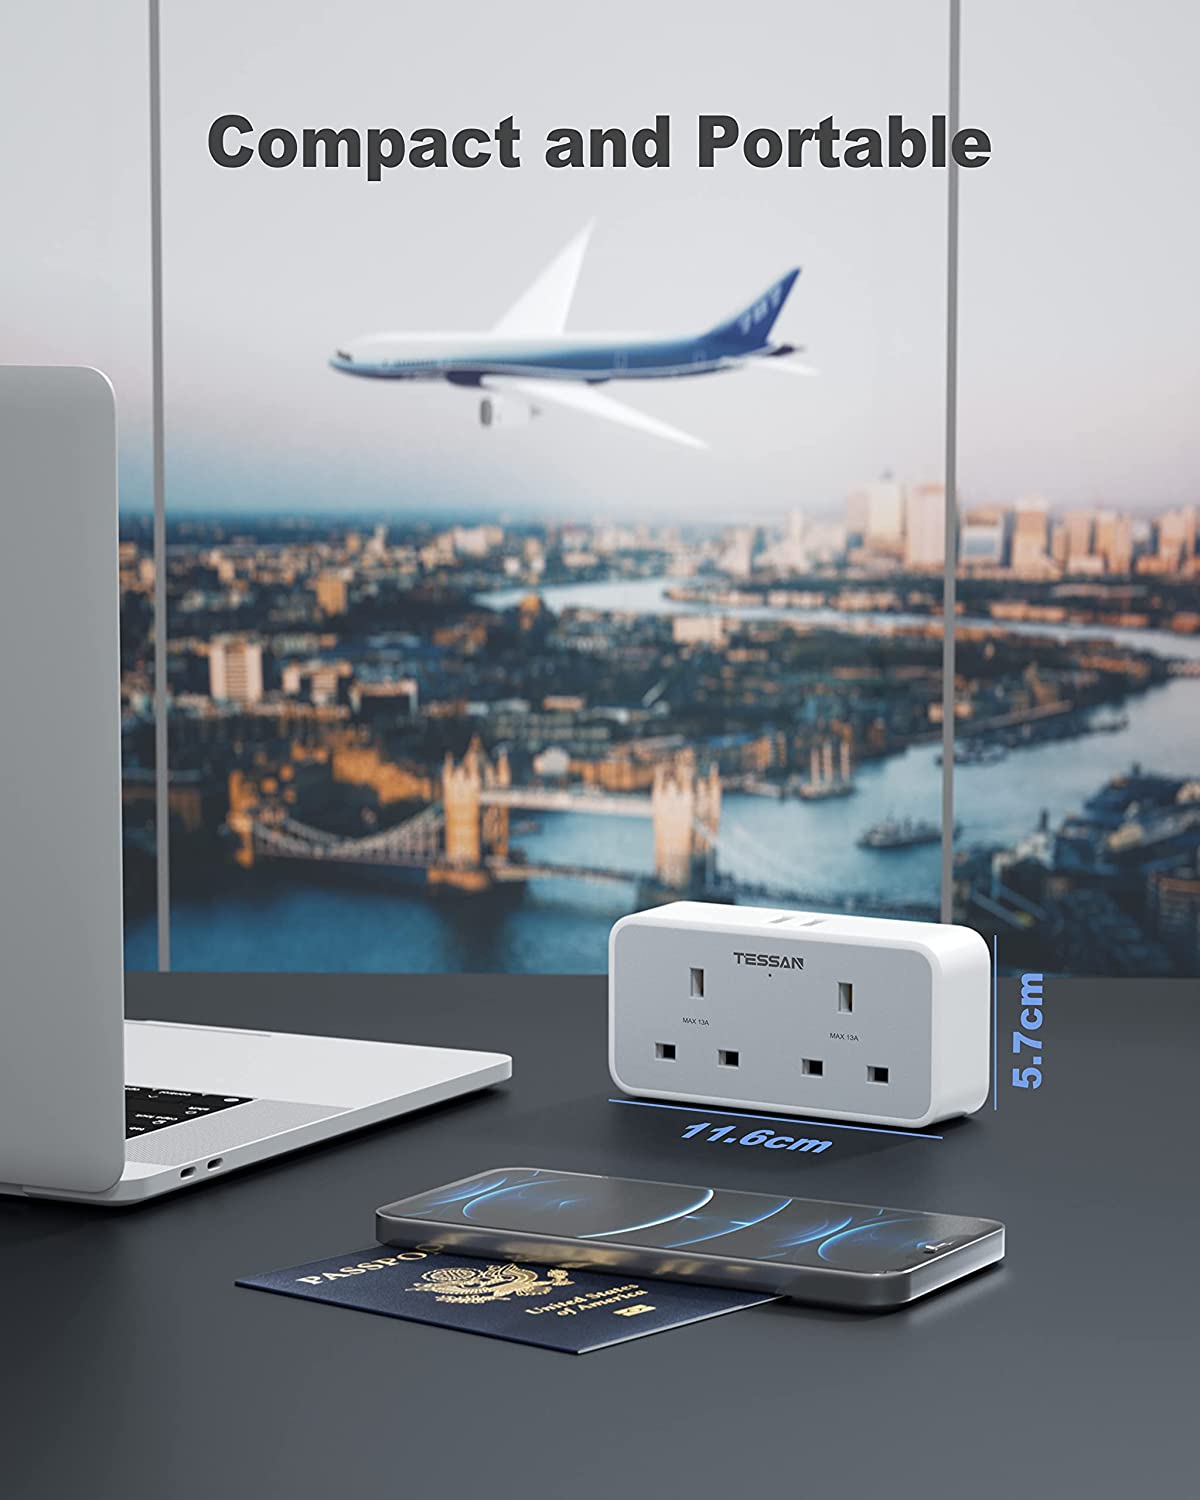 UK to US plug adaptor 2 Way Grounded USA Travel Adapter